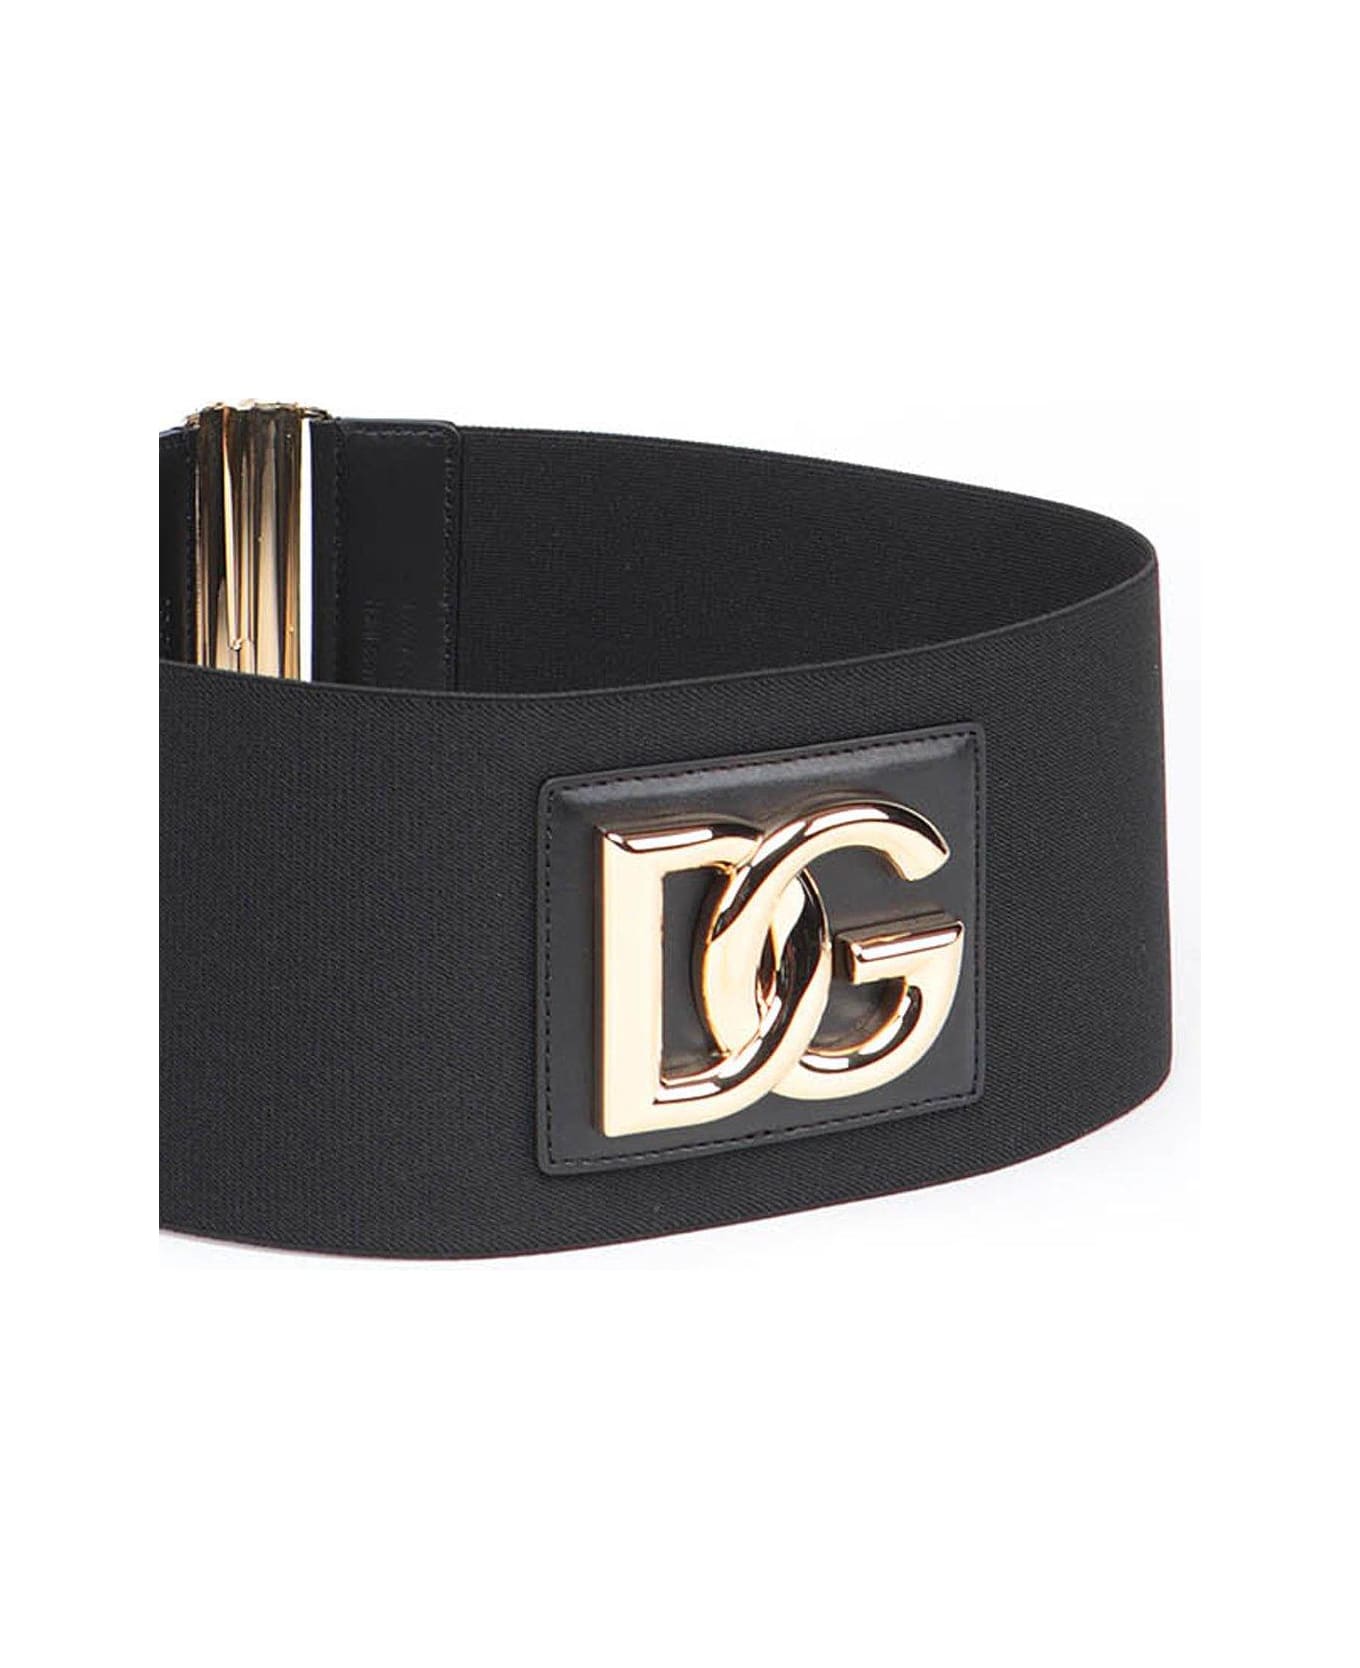 Dolce & Gabbana Dg Stretch Band Belt - Nero/nero